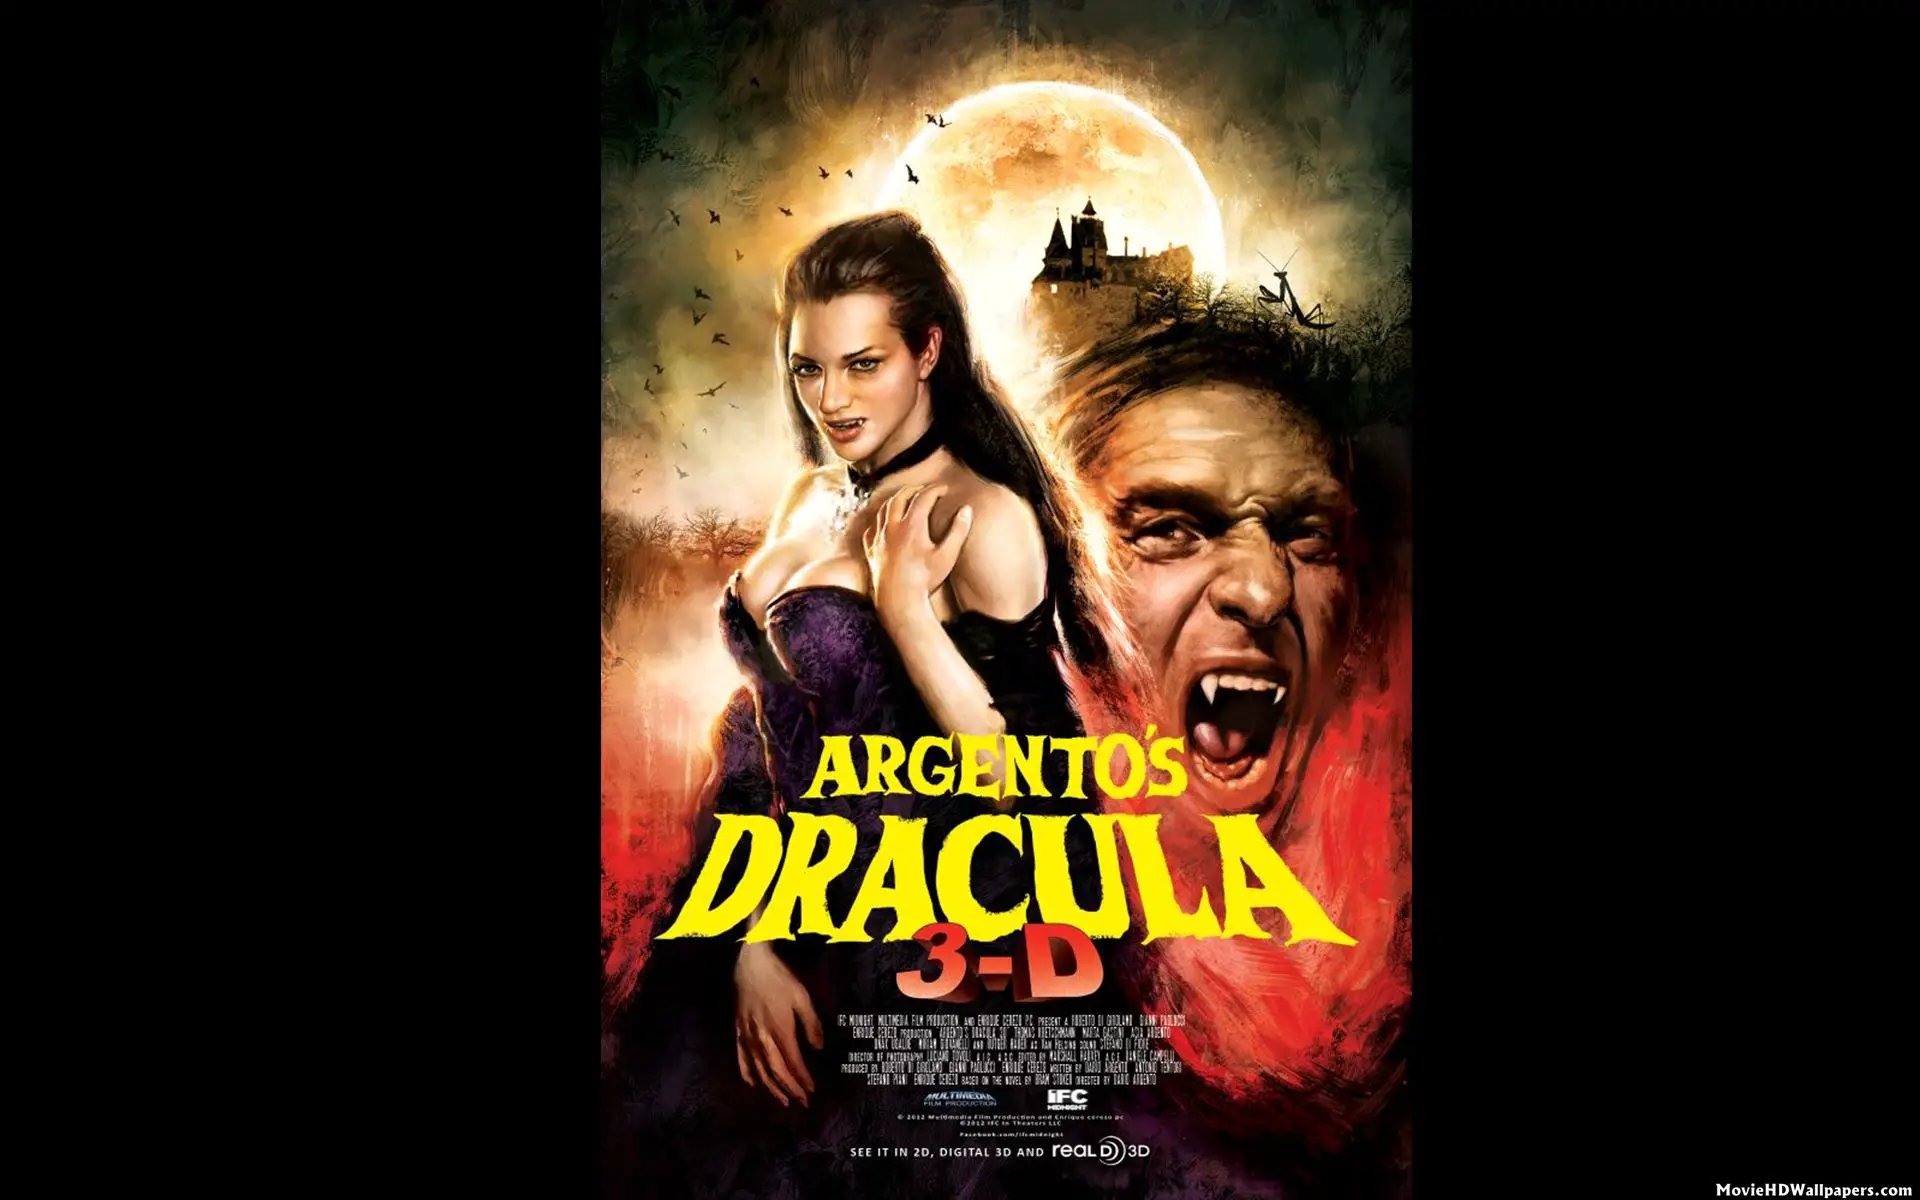 Argento's Dracula 3D Poster